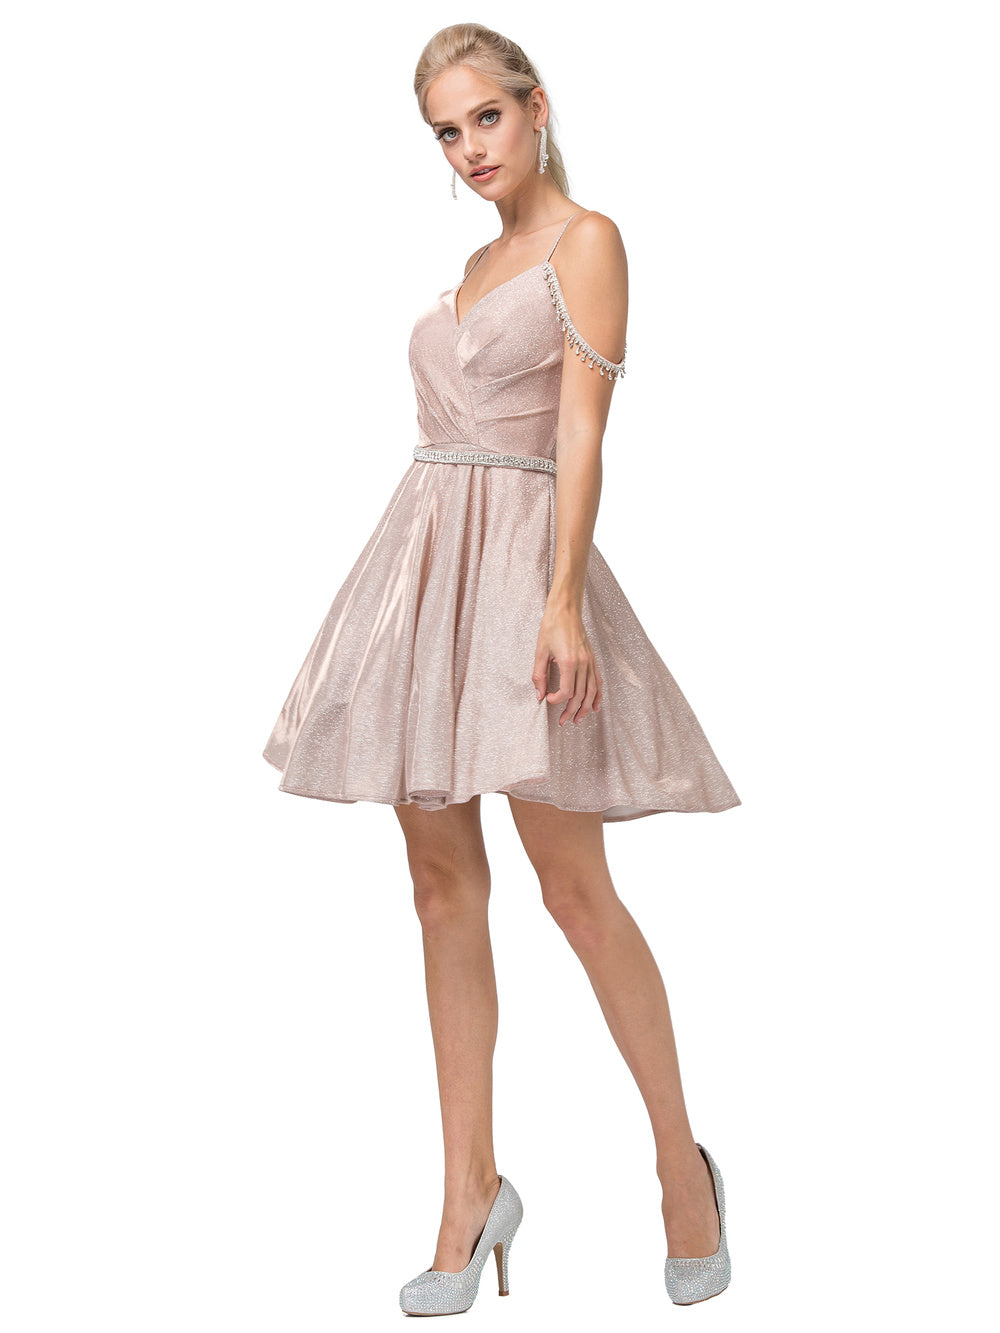 Dancing Queen 3173 Short Dress Size XXL (14) Fit & Flare